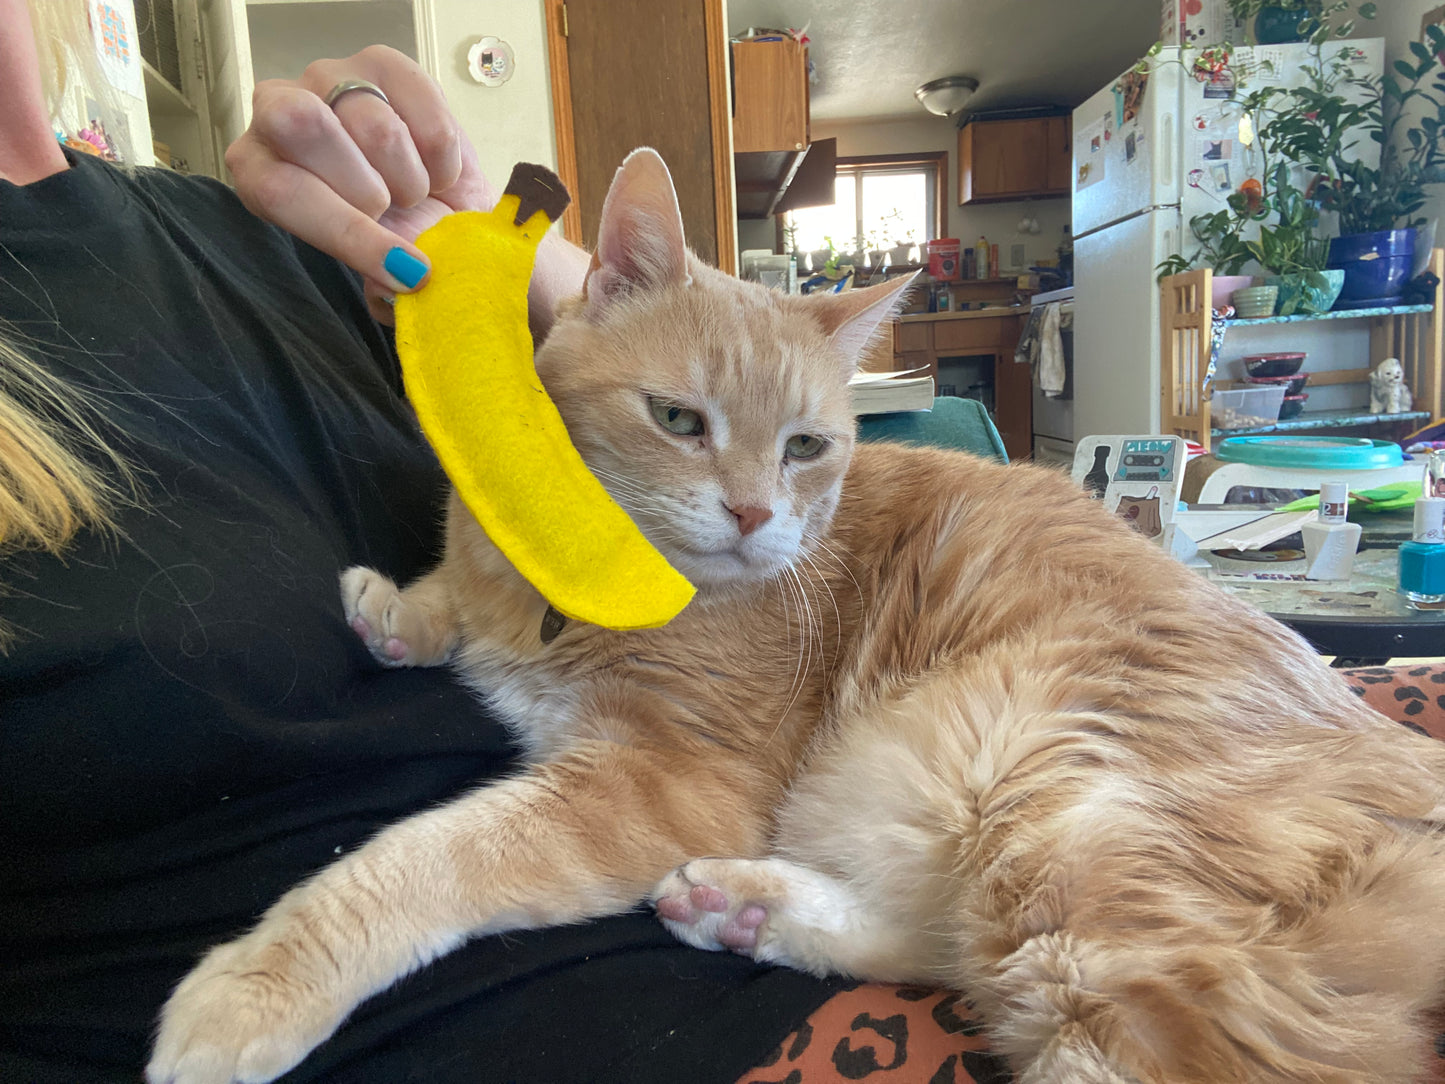 Banana catnip toy